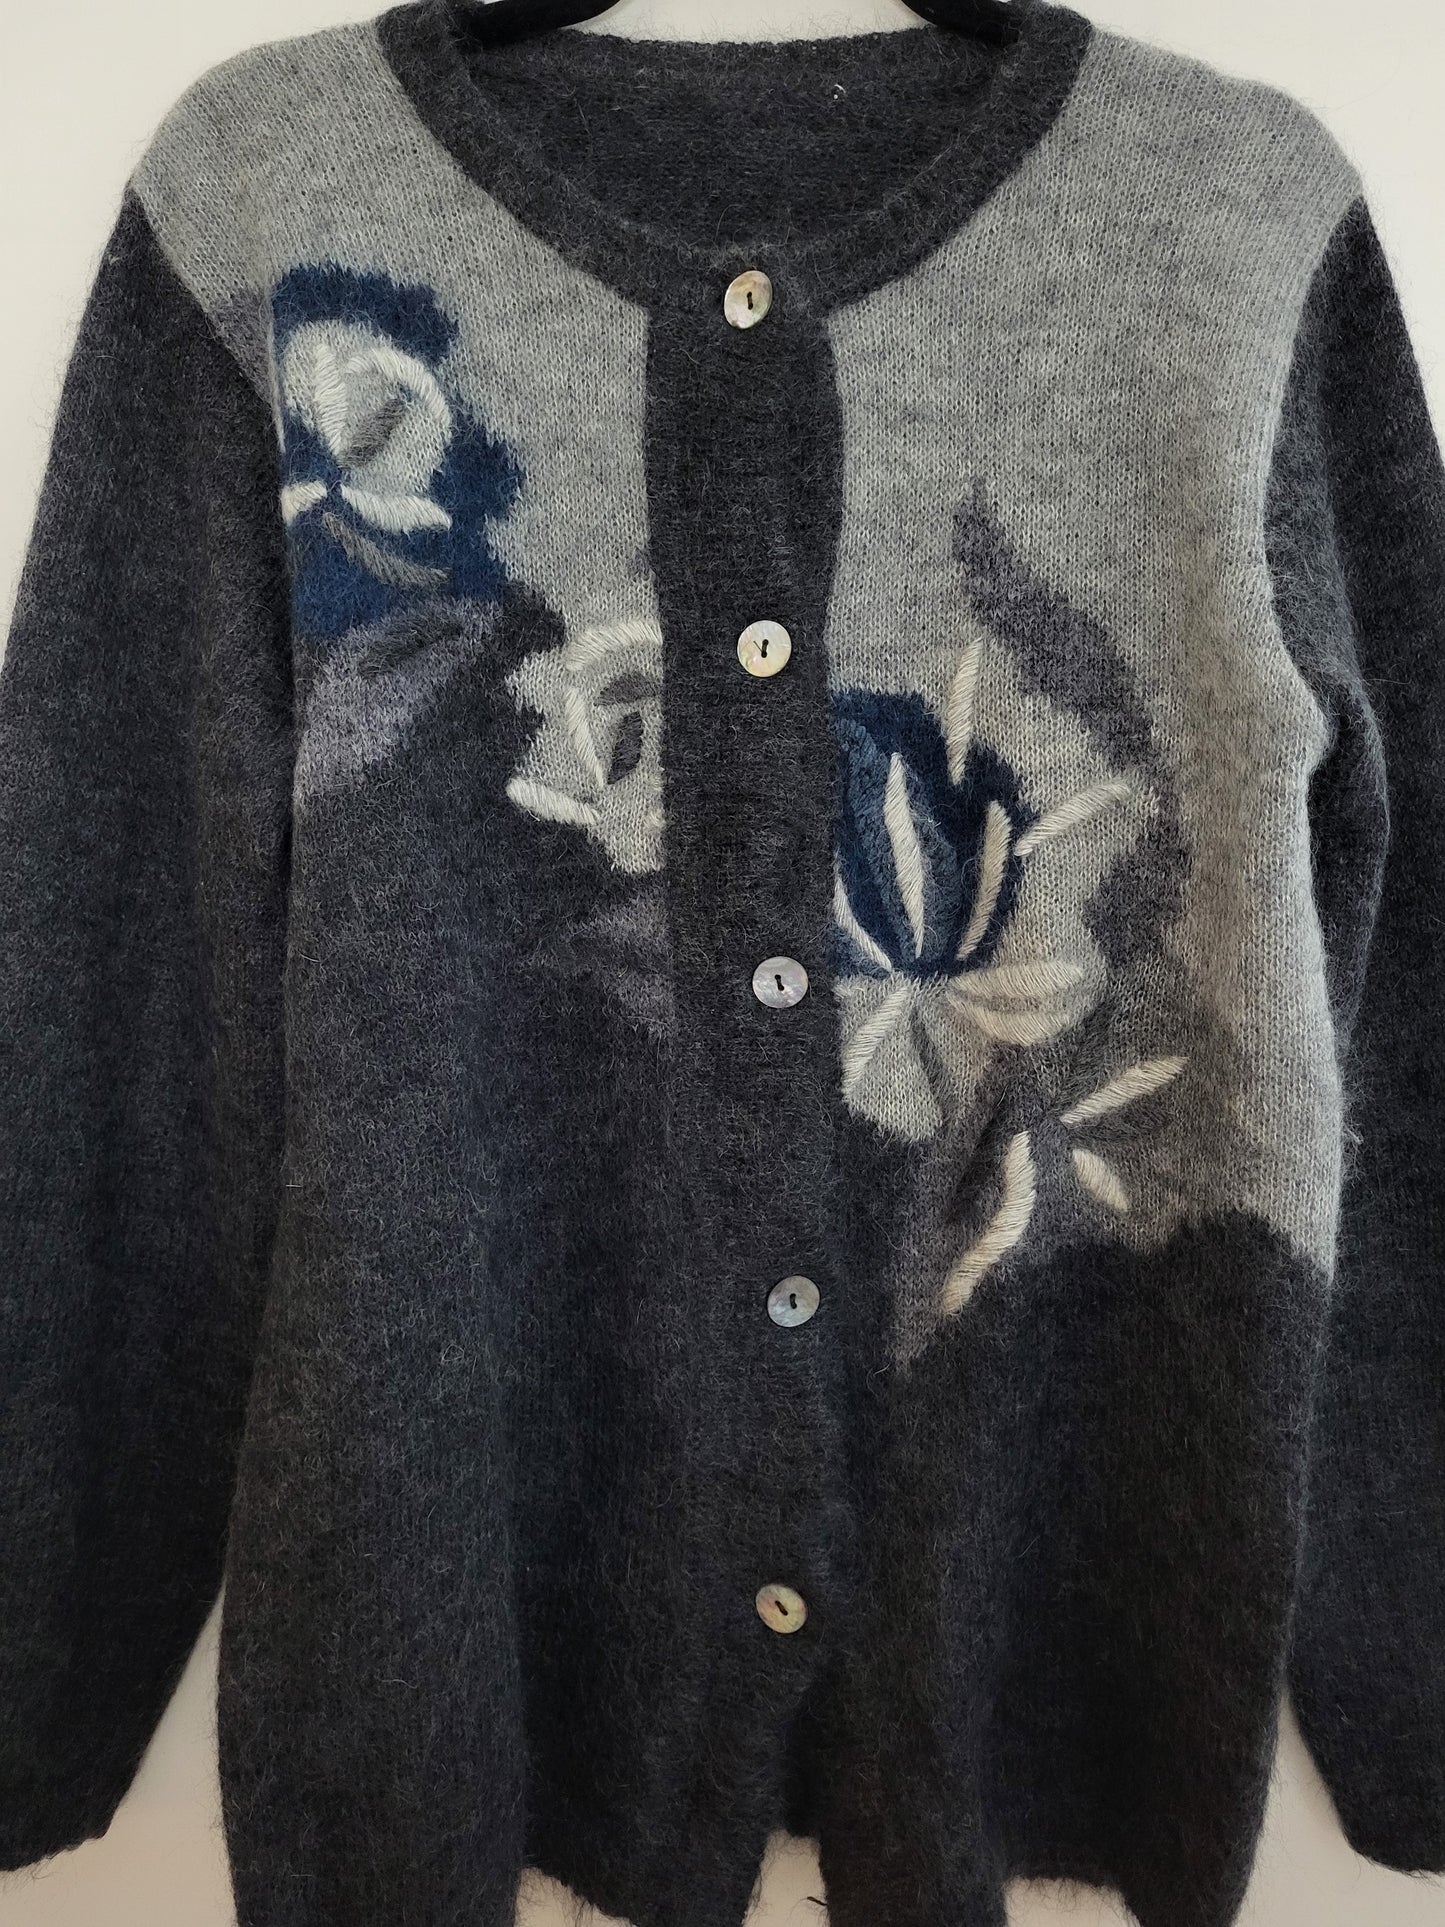 Vintage - Strickjacke/Pullover - Muster - Vintage Wolle - Grau - Damen - M/L